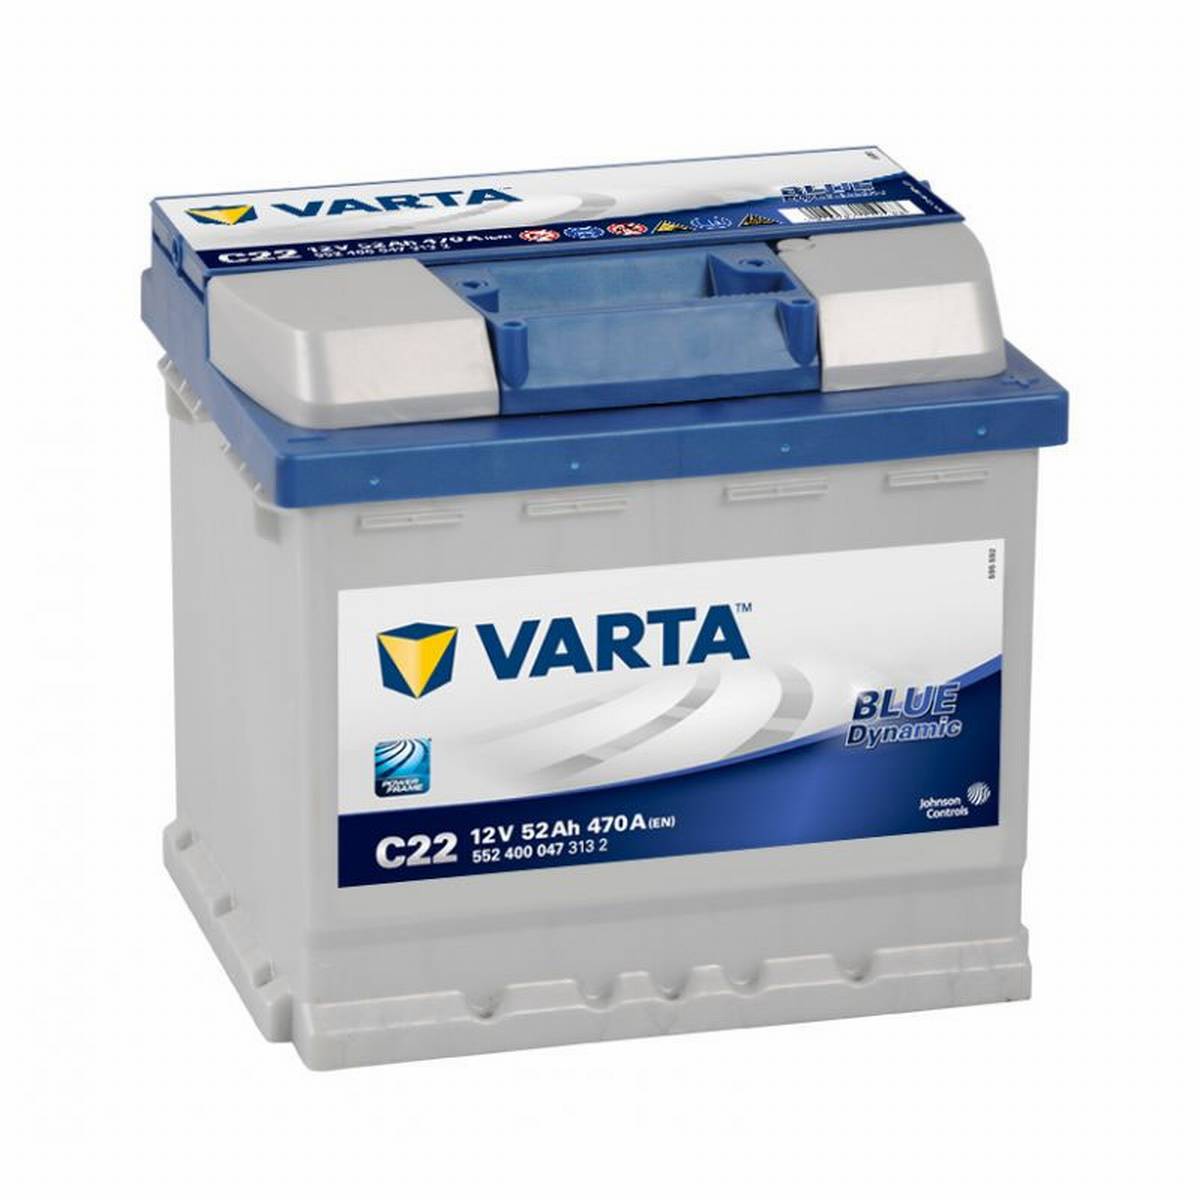 VARTA C22 Blue Dynamic 12V 52Ah 470A Batteria auto 552 400 047